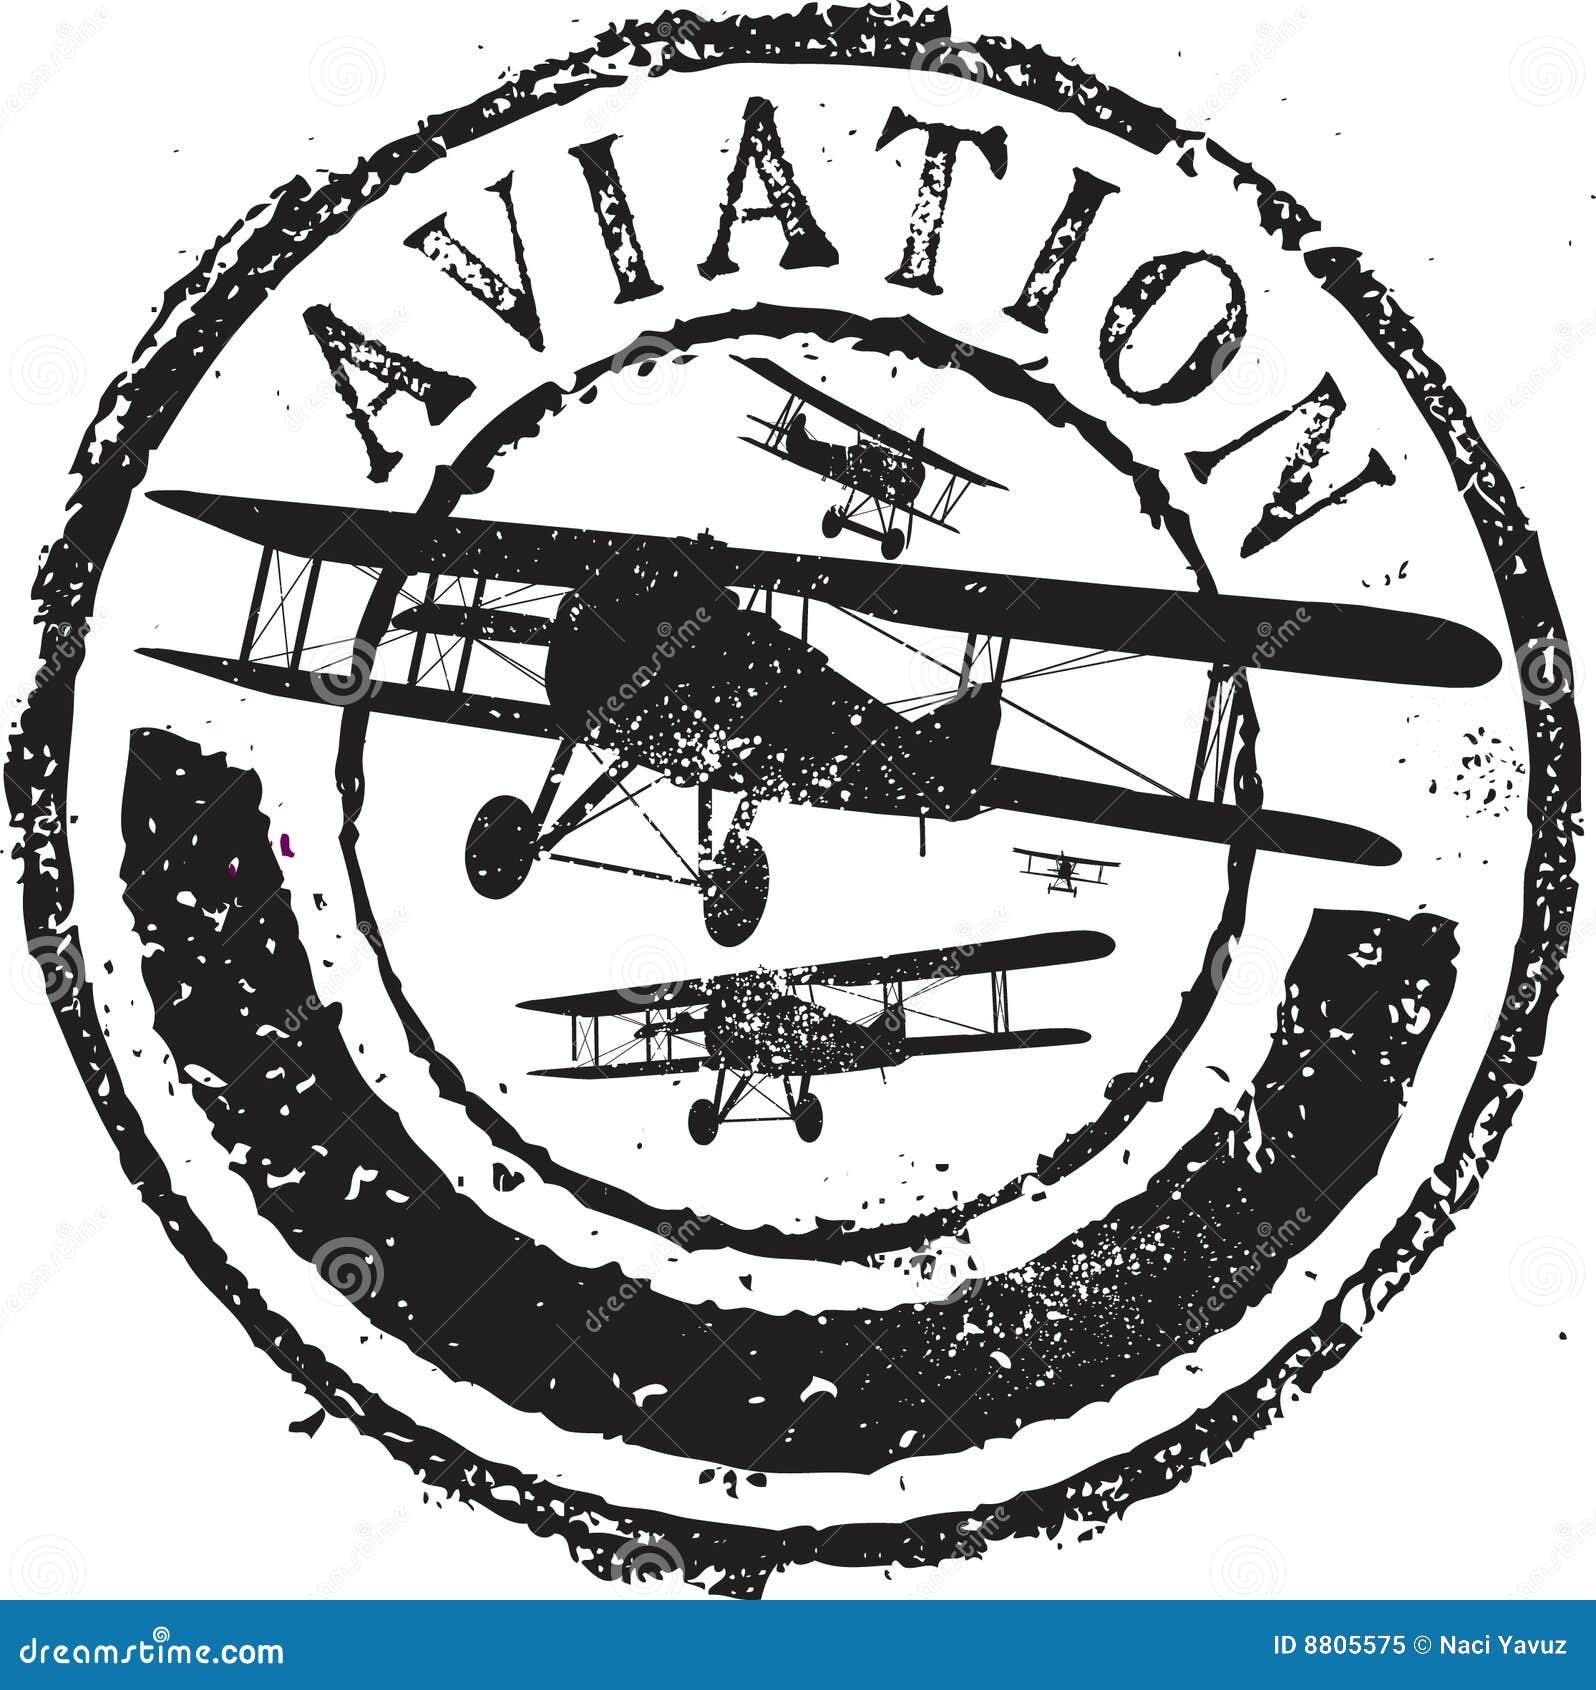 aviation stamp